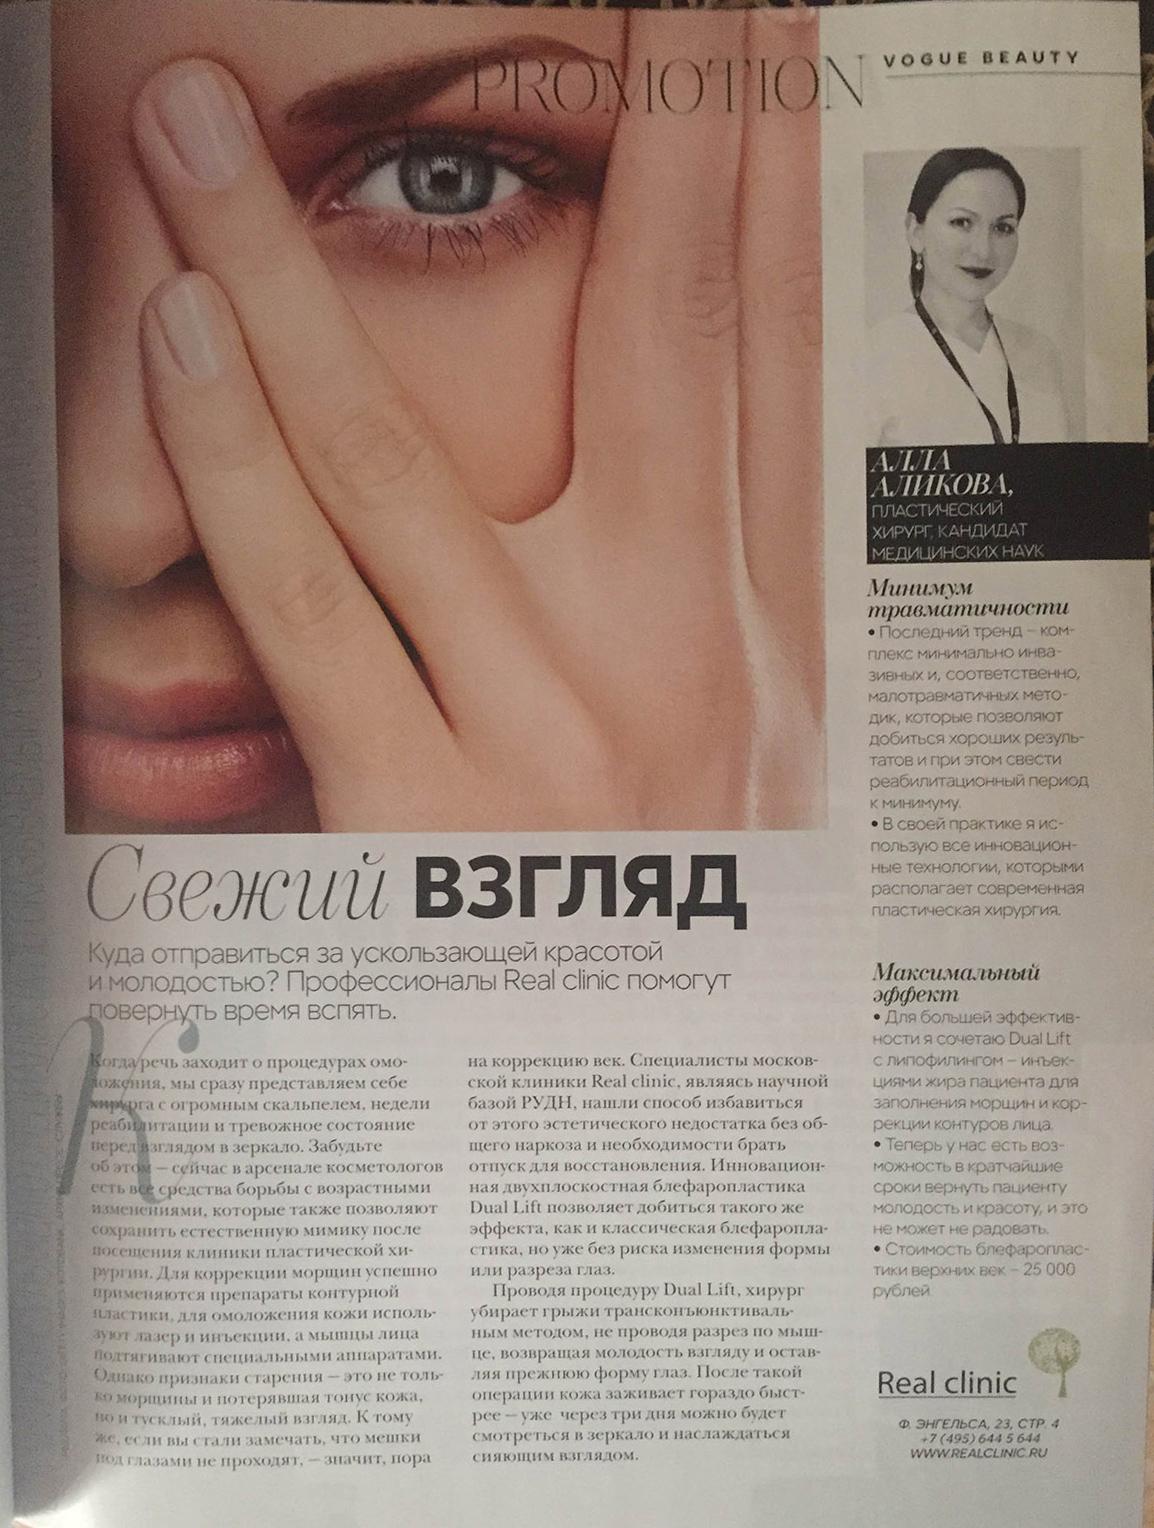 Статья для журнала Vogue Beauty — пластический хирург Алла Аликова